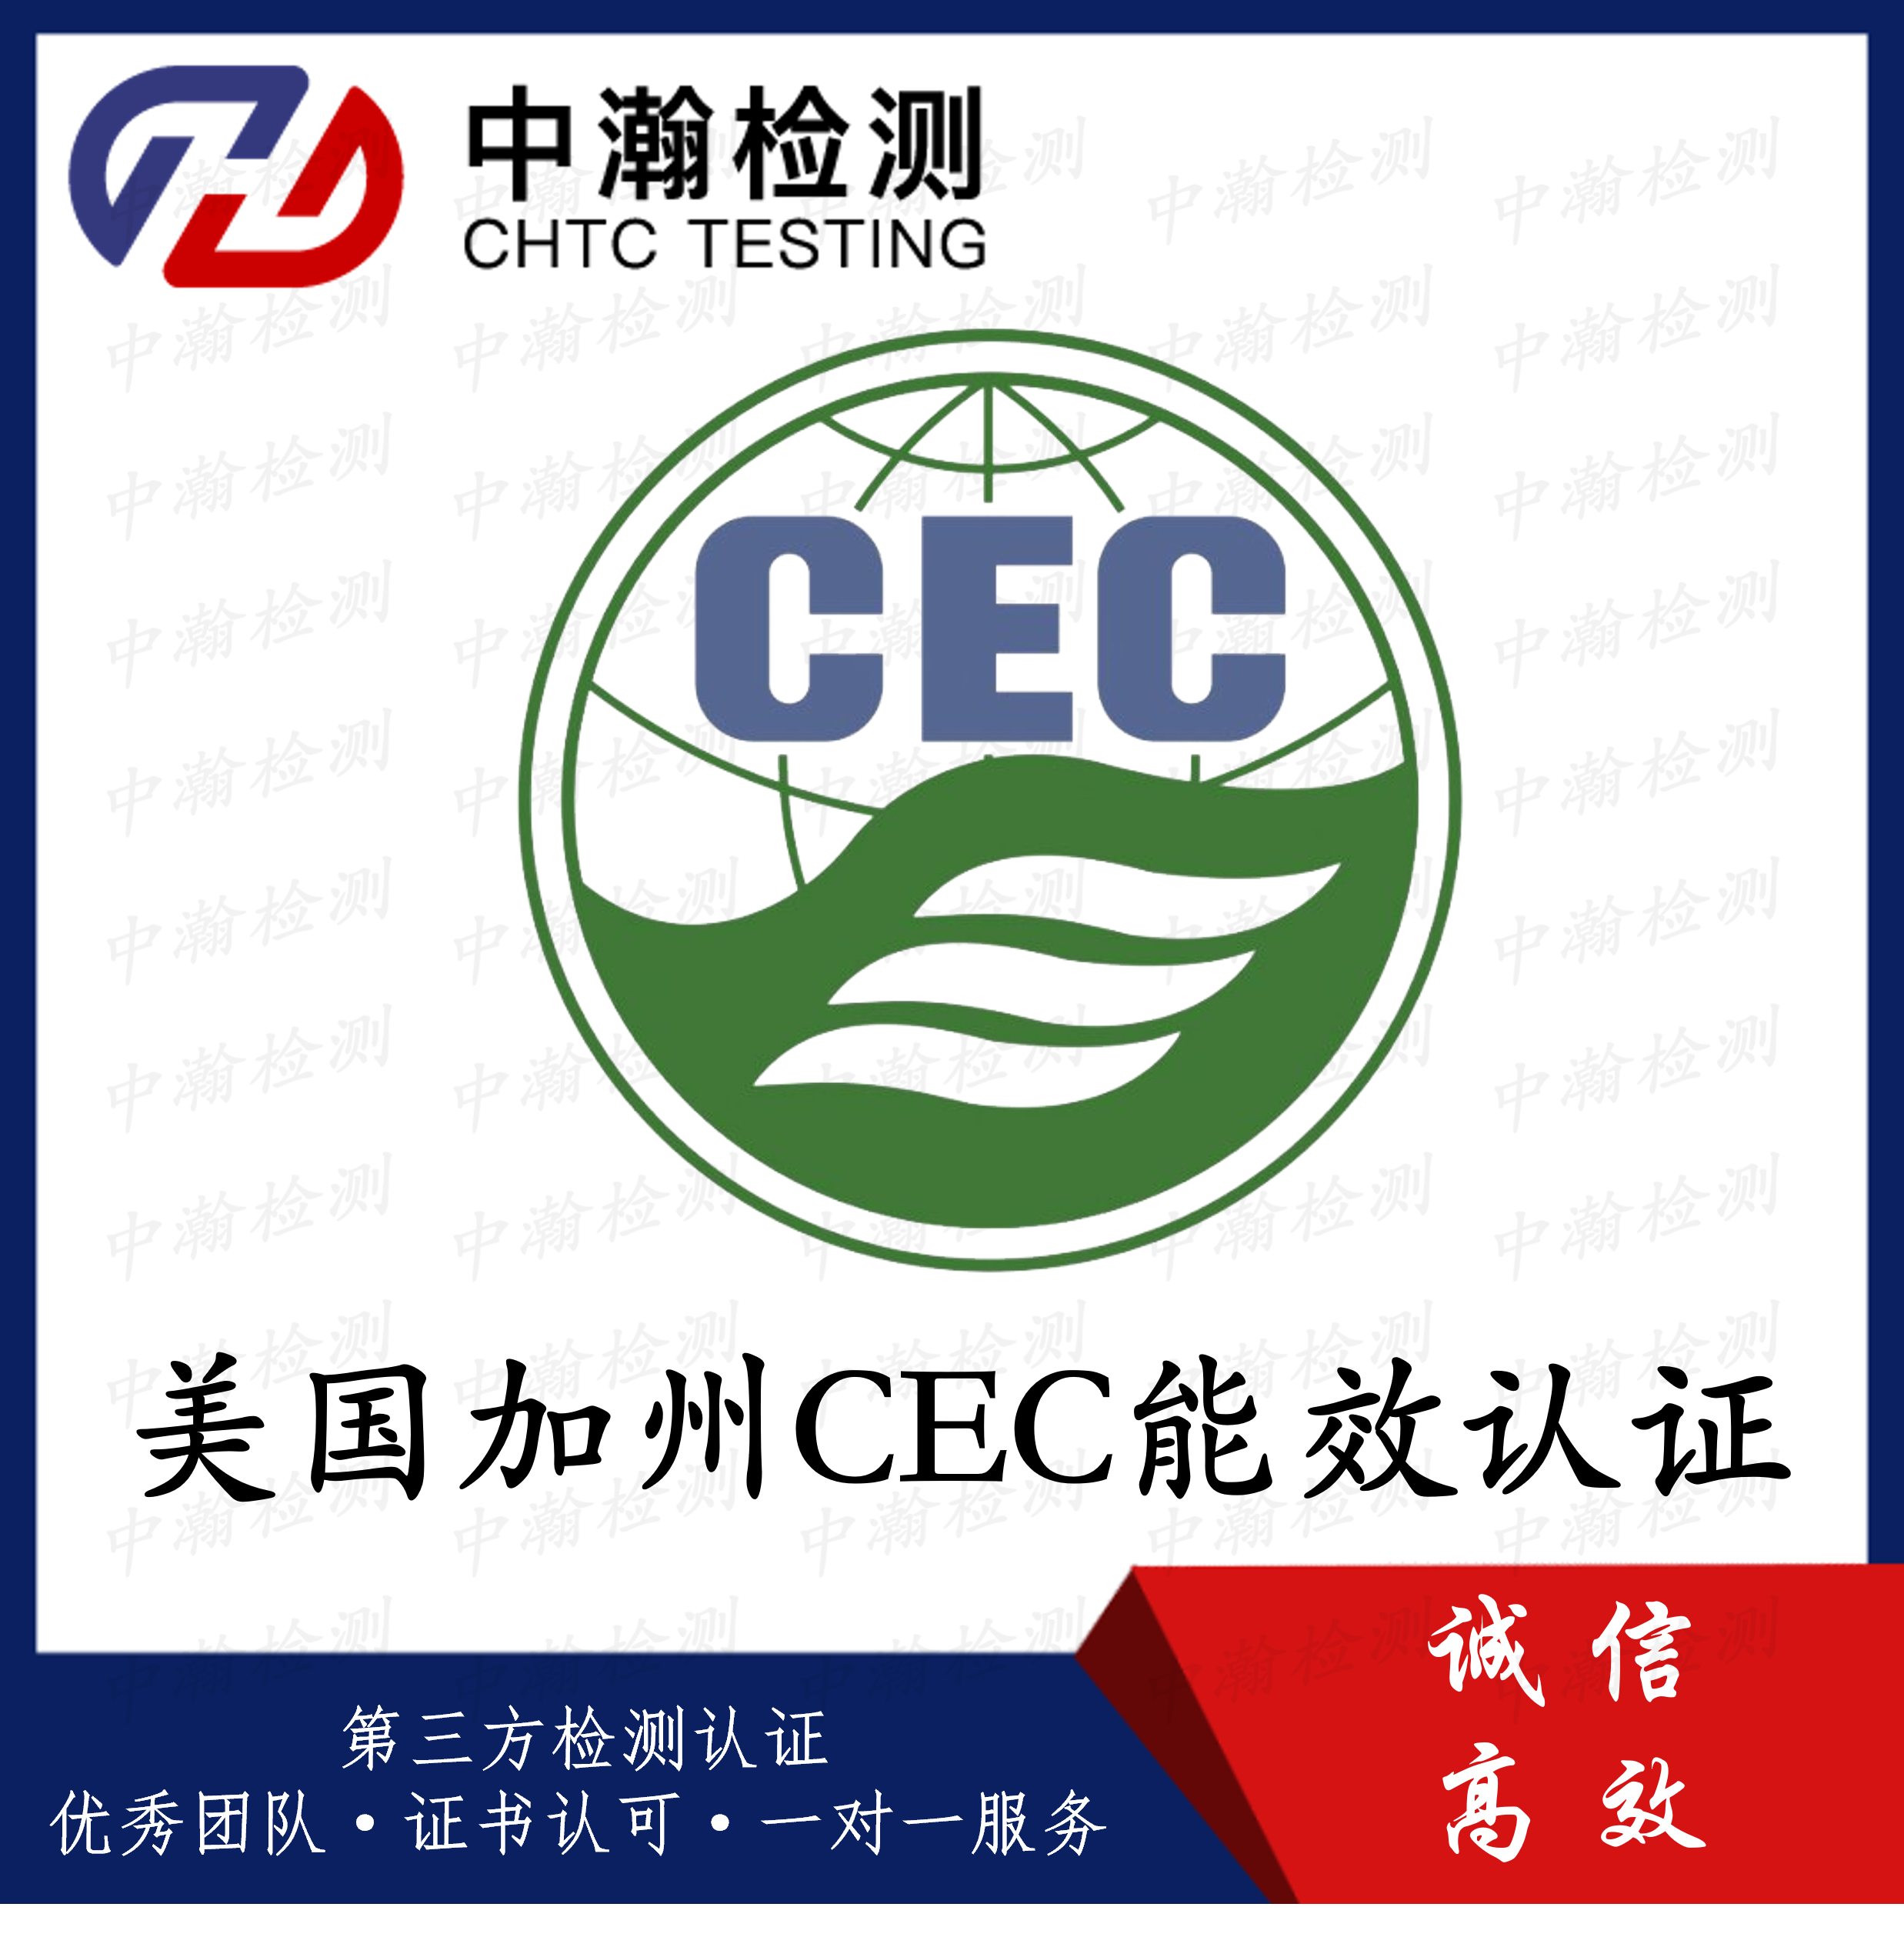 CEC认证相关内容介绍